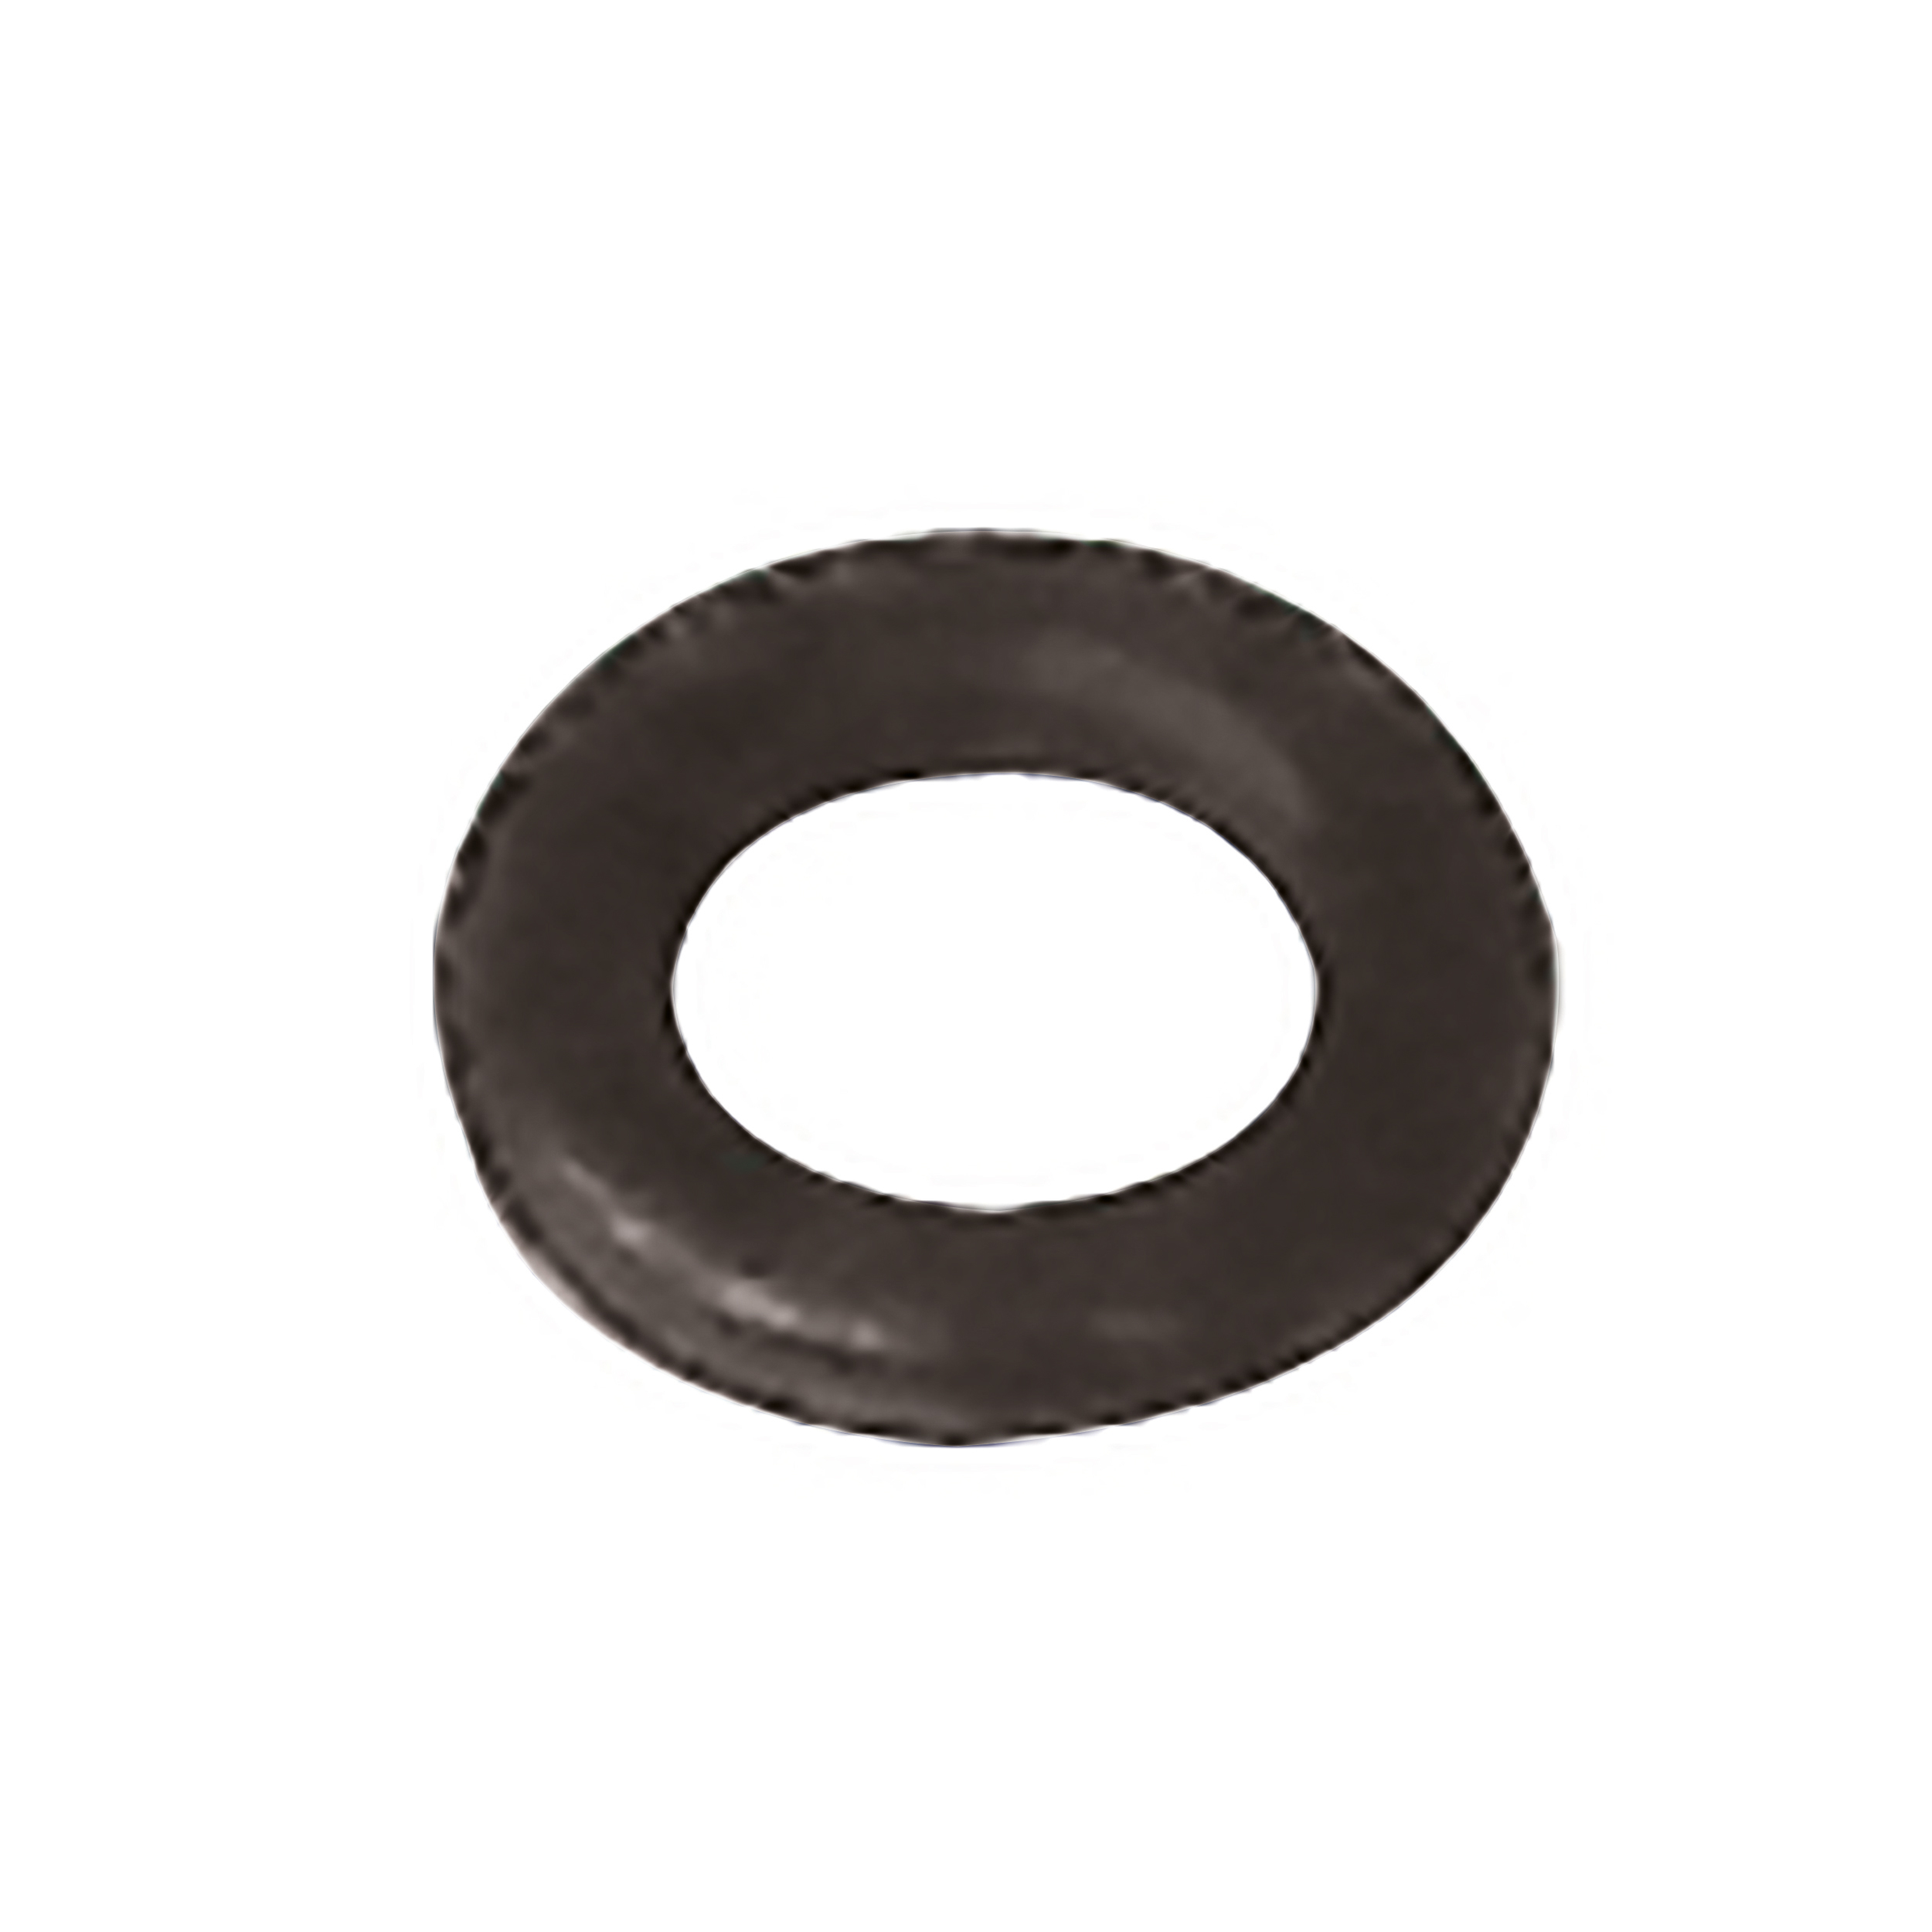 O-ring for teflon core